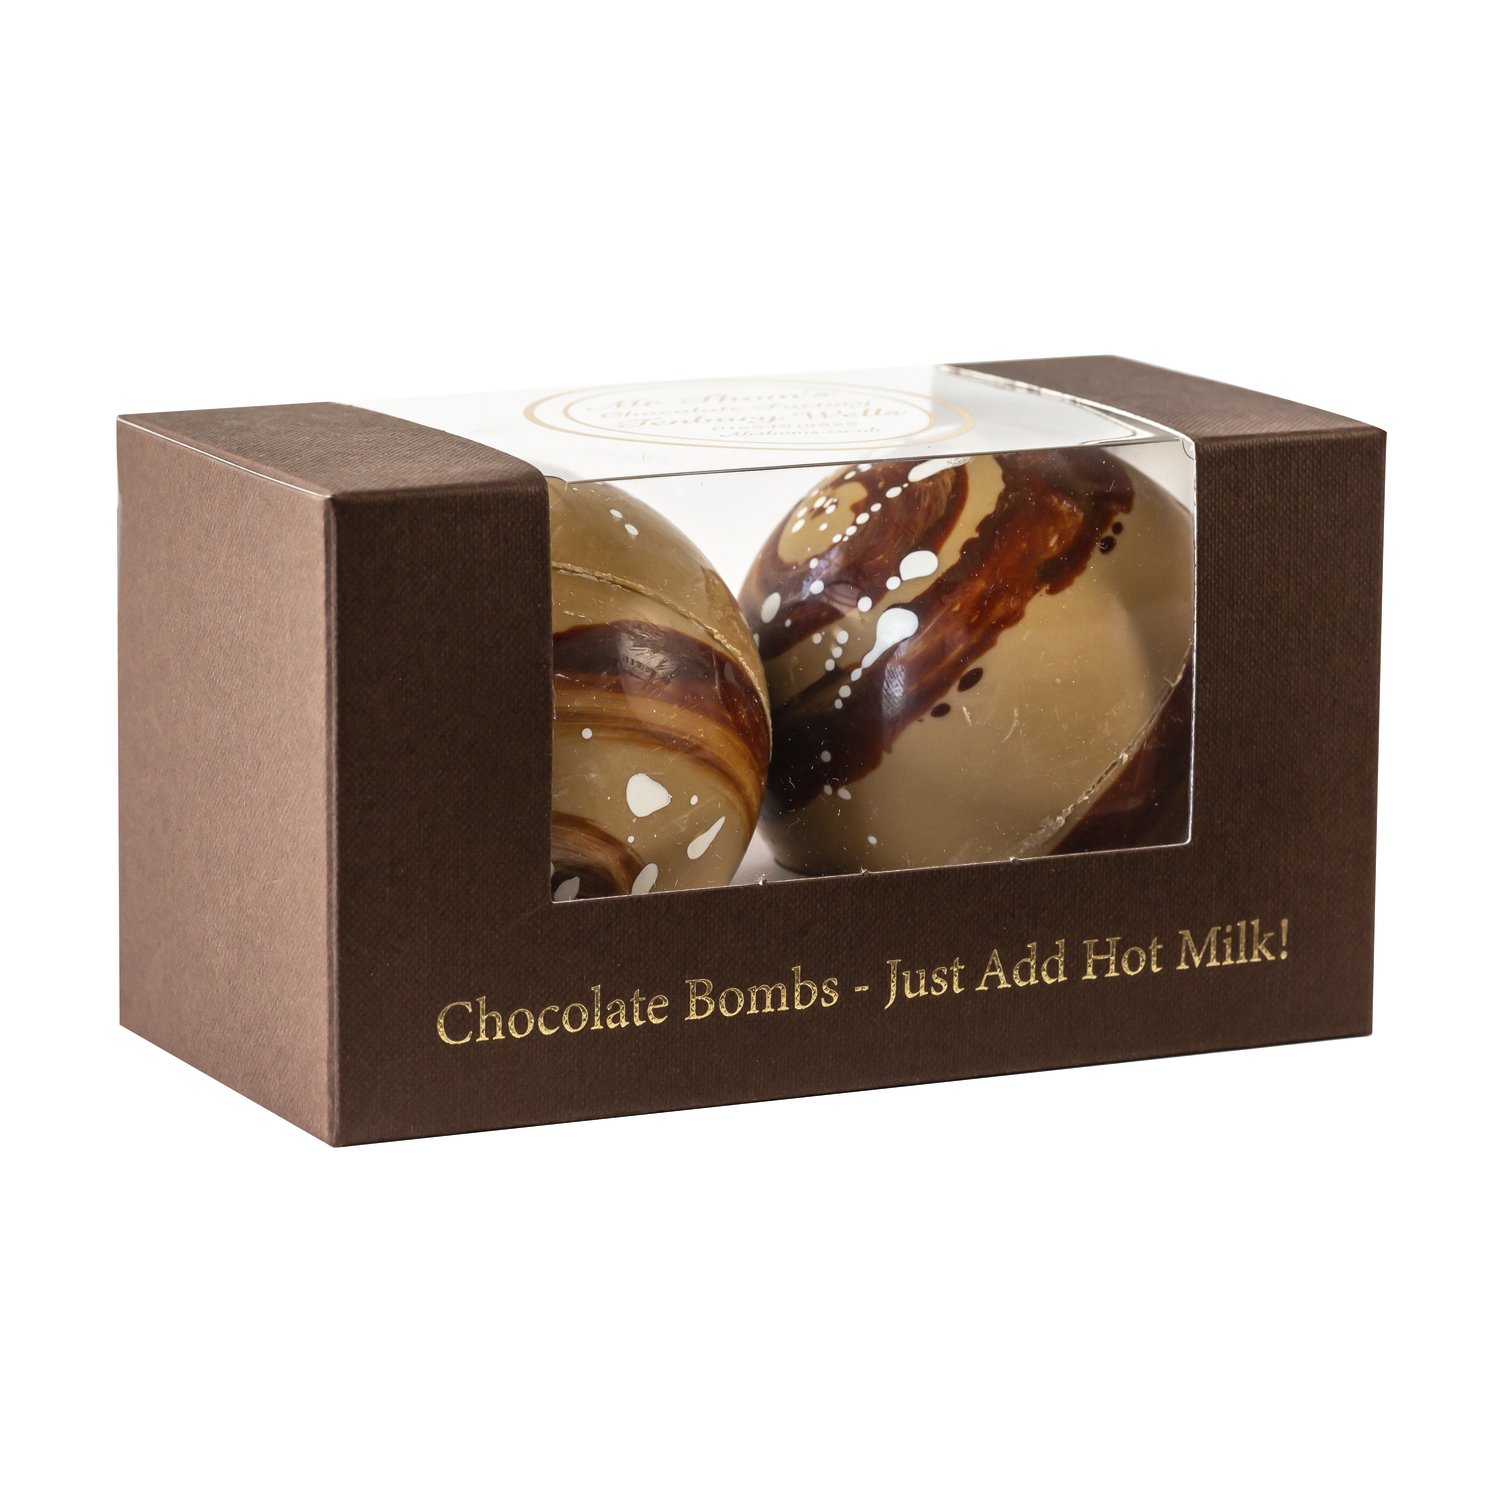 Mr Thom's duo caramel milk chocolate bomb in gift box - VAT FREE - 6x160g